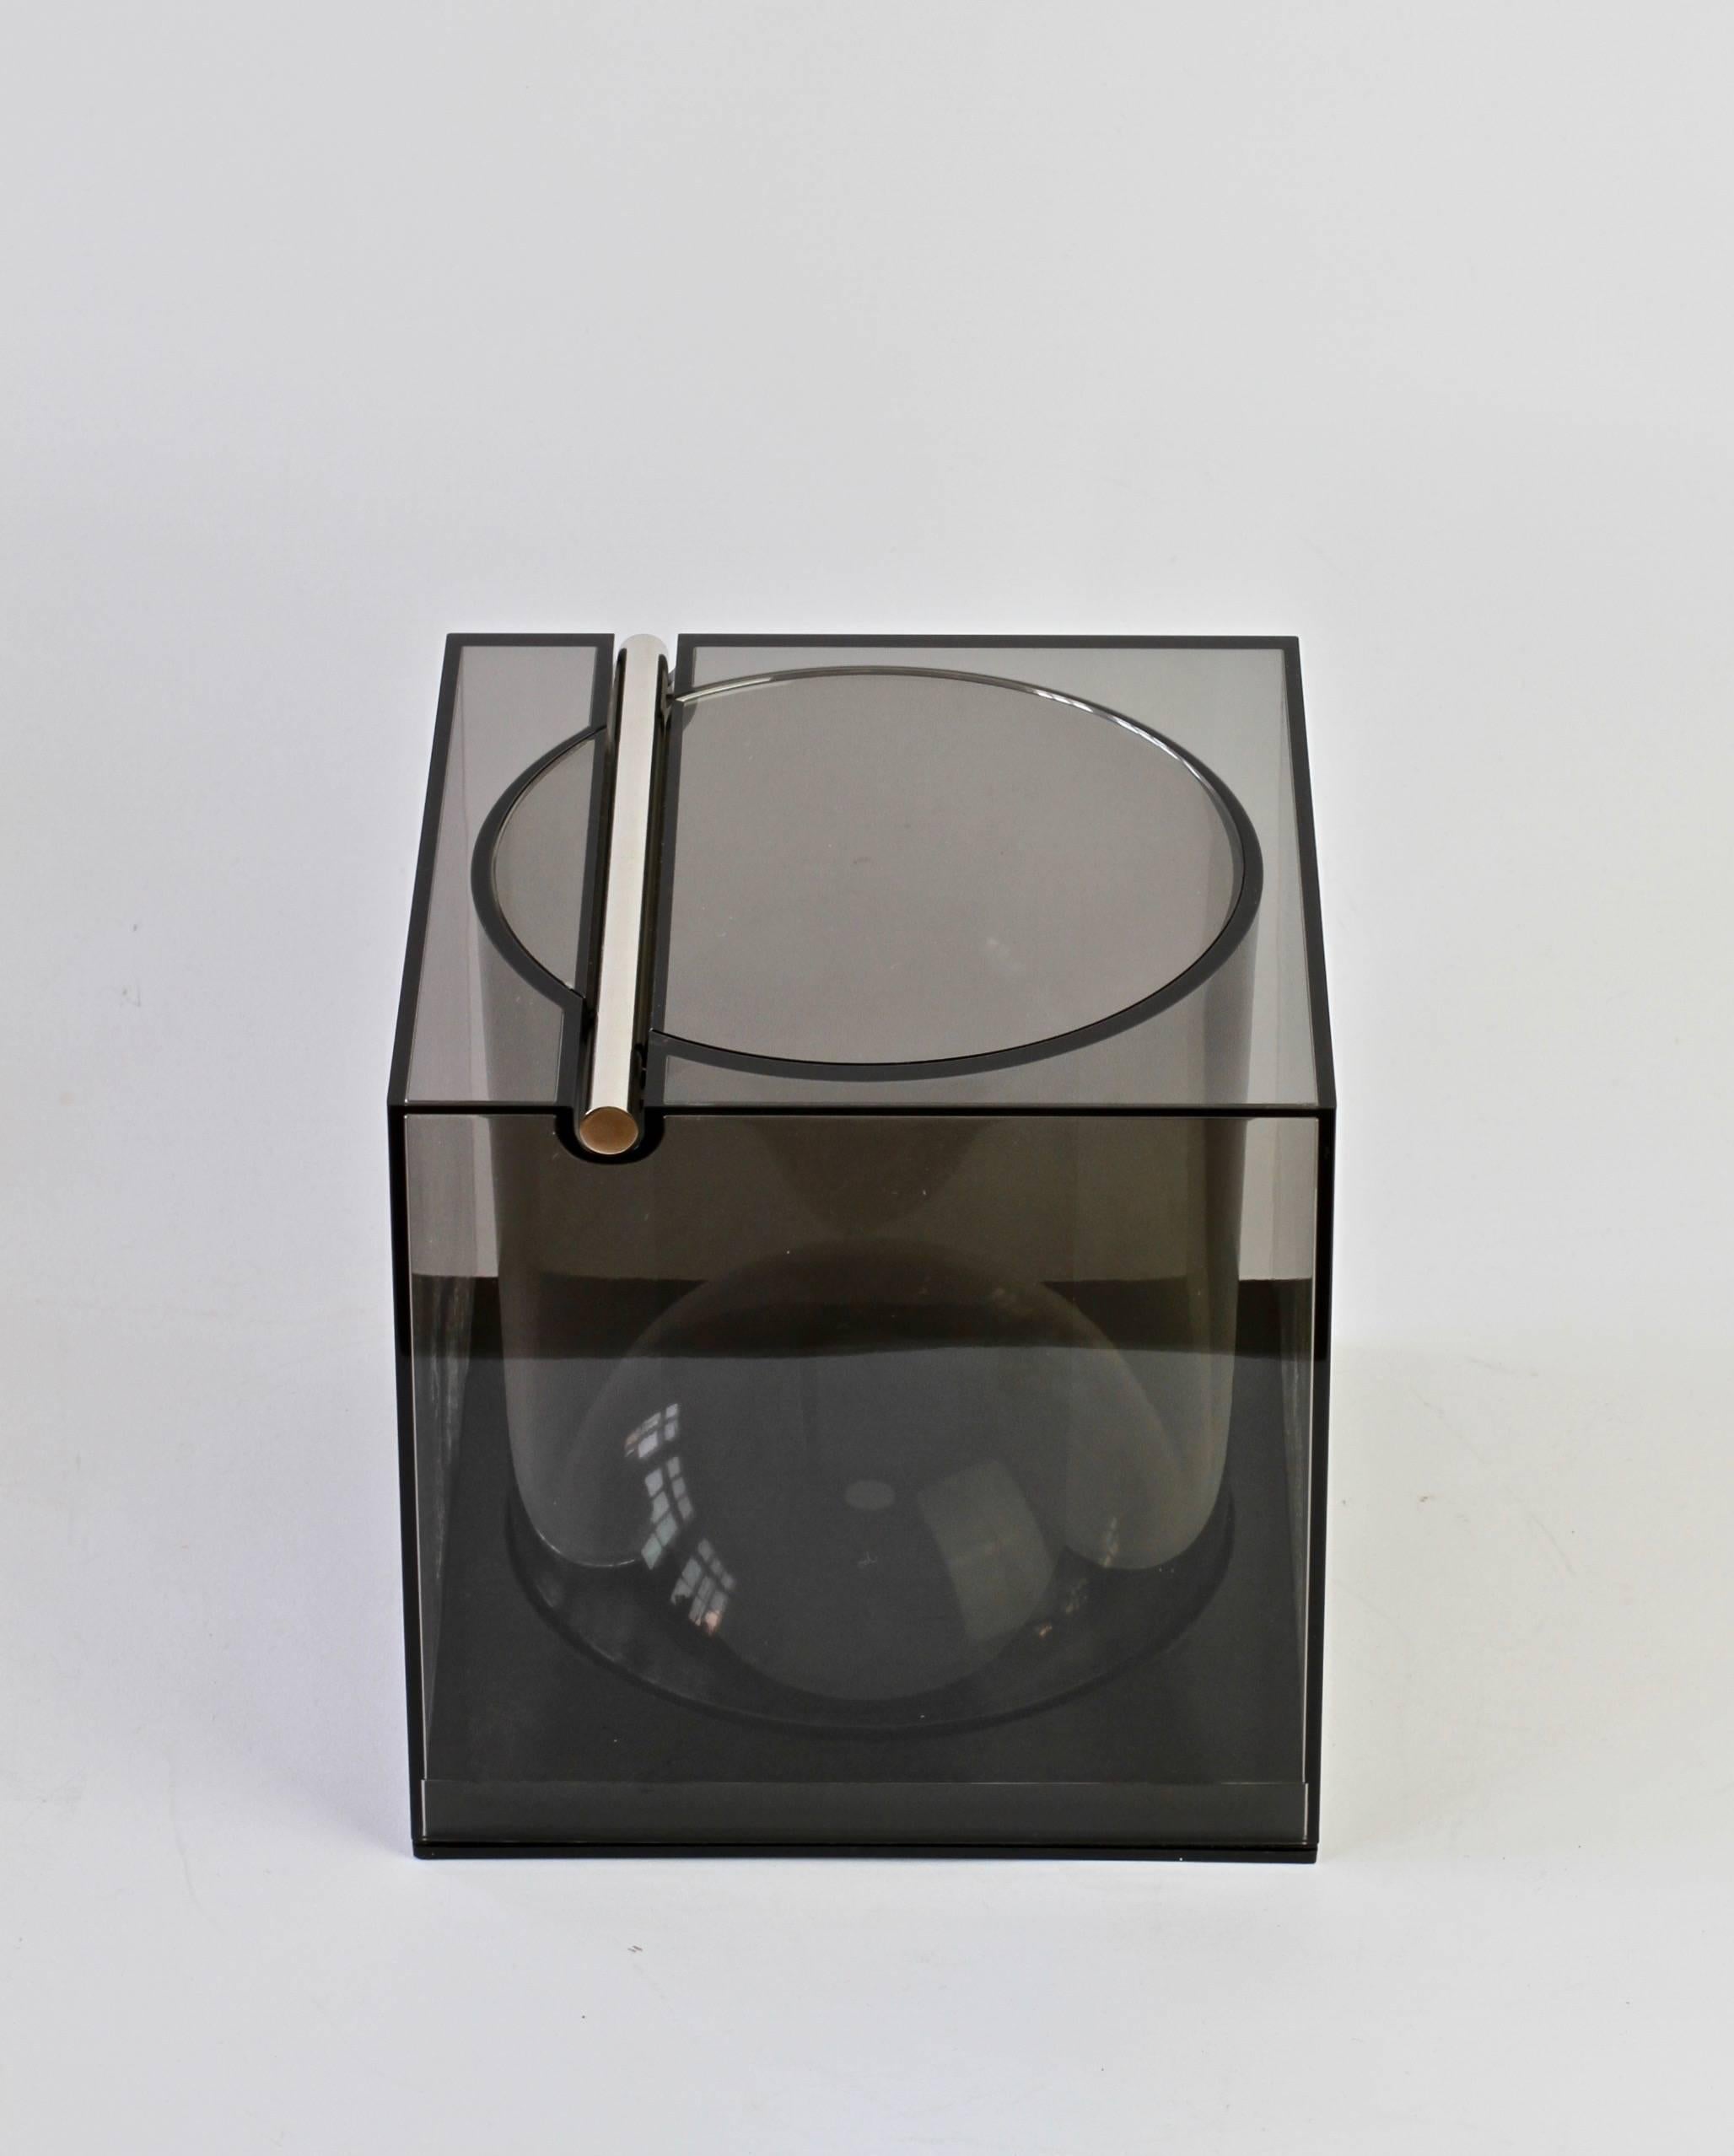 Italian Studio Opi Toned Acrylic Ice Bucket or Holder for Cini & Nils, Milan, 1970s